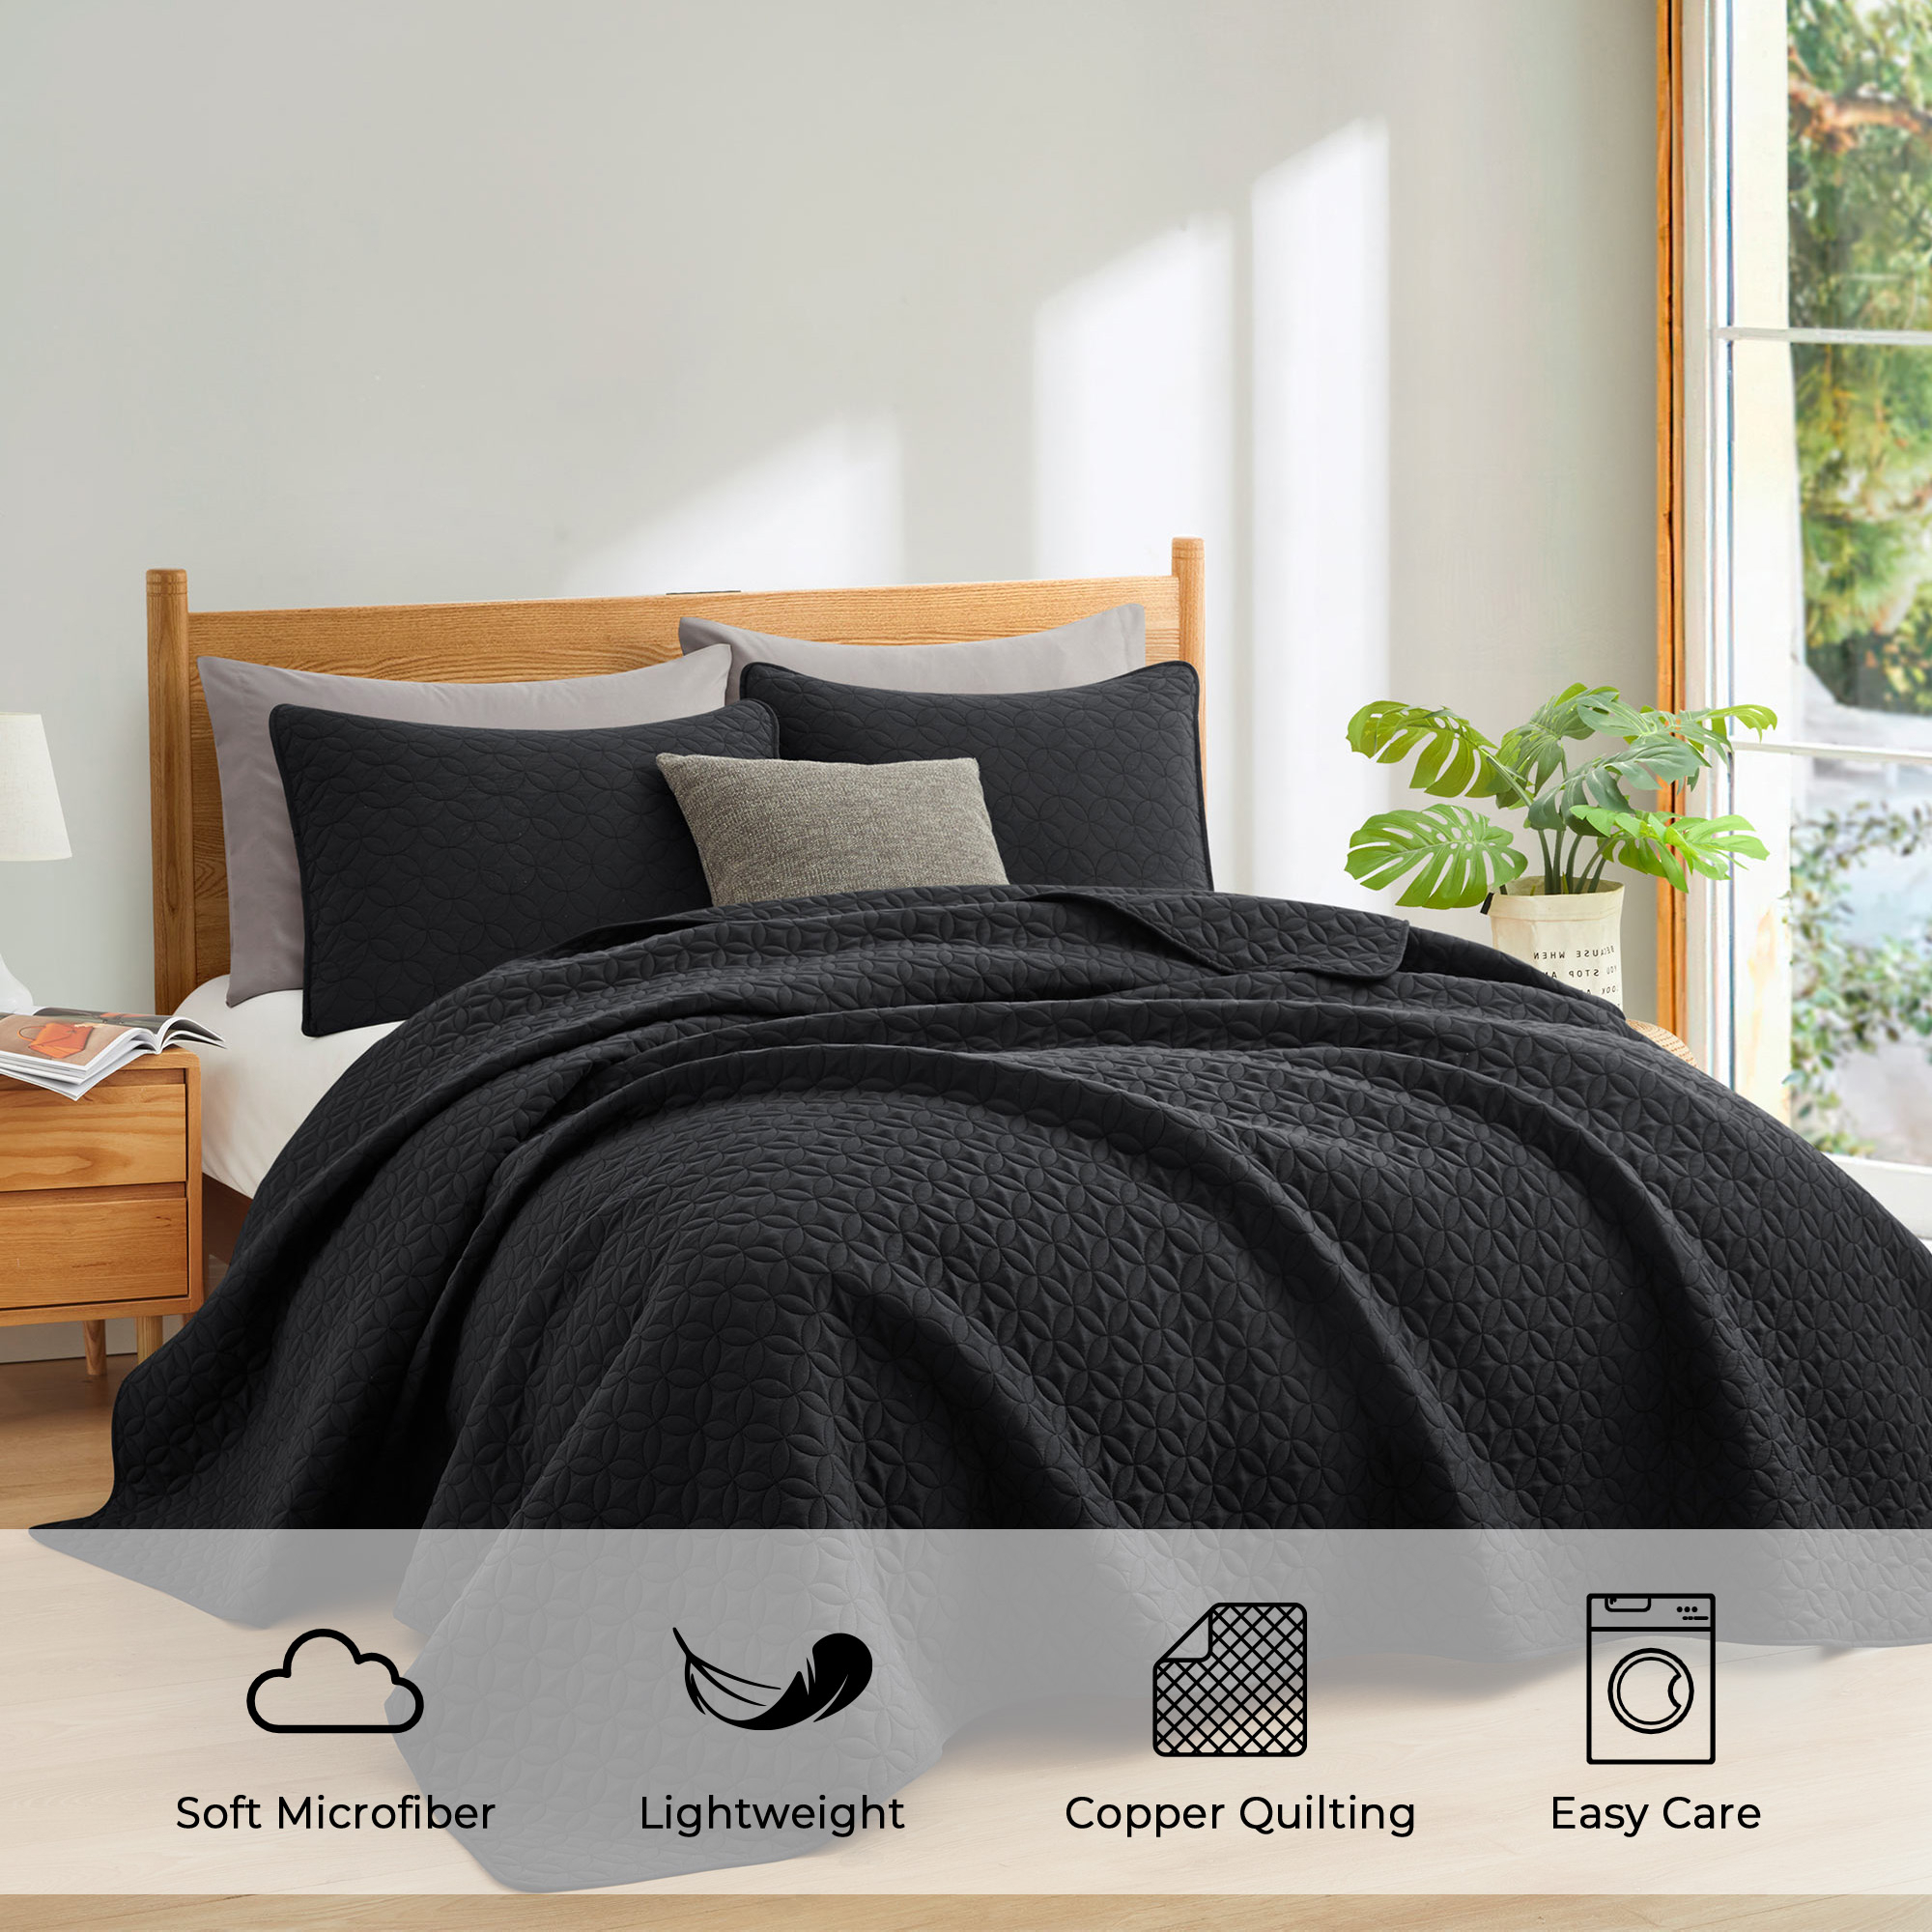 Reversible Bedspread Coverlet Set - Premium Microfiber Ultra Soft Lightweight 2 Or 3-Piece Quilt Set - Twin Size